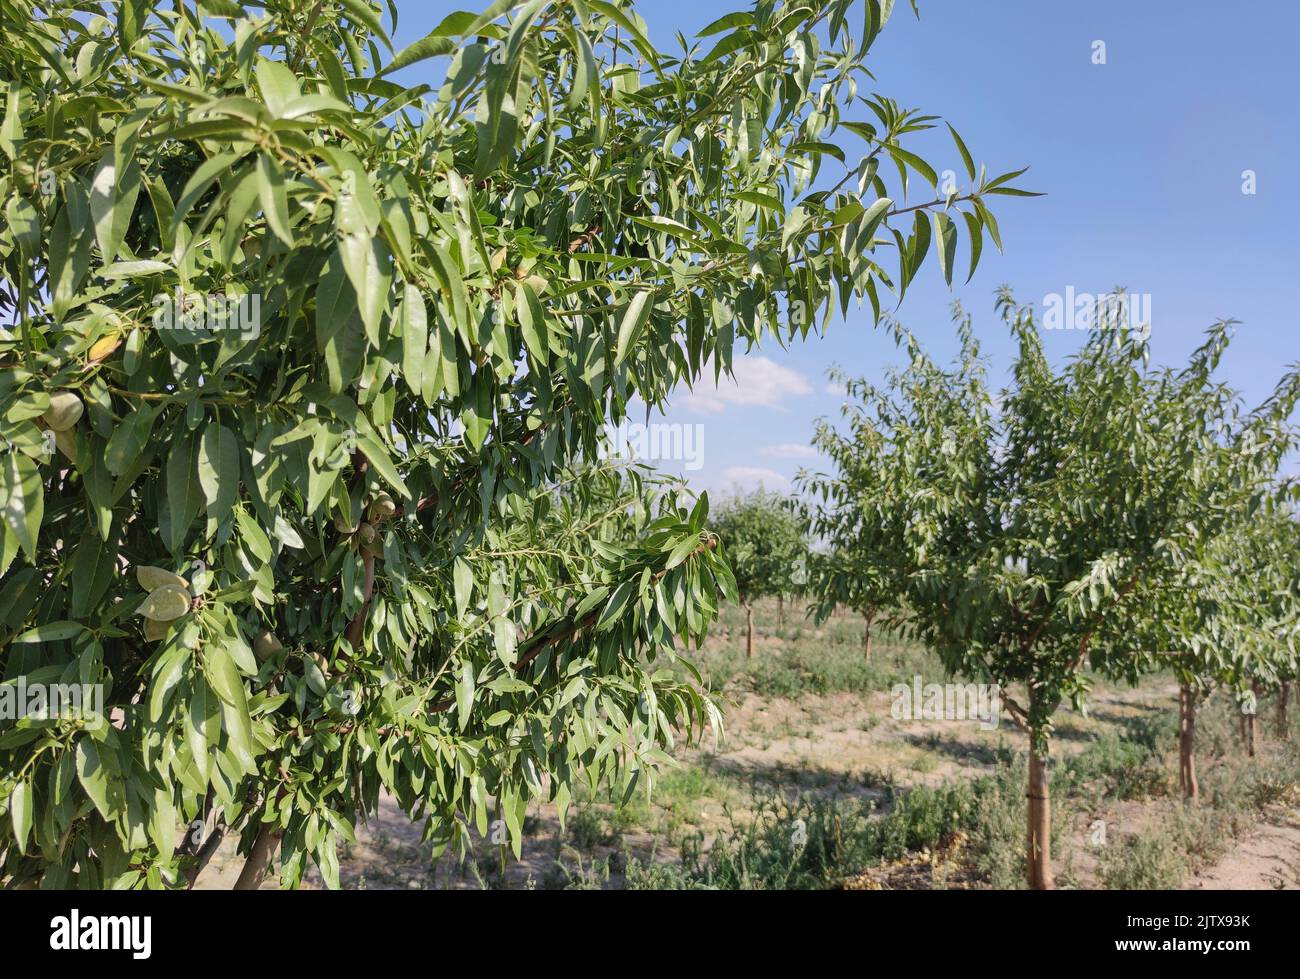 Giovane piantagione di mandorli in estate. Las Vegas Altas del Guadiana, Badajoz, Spagna. Foto Stock